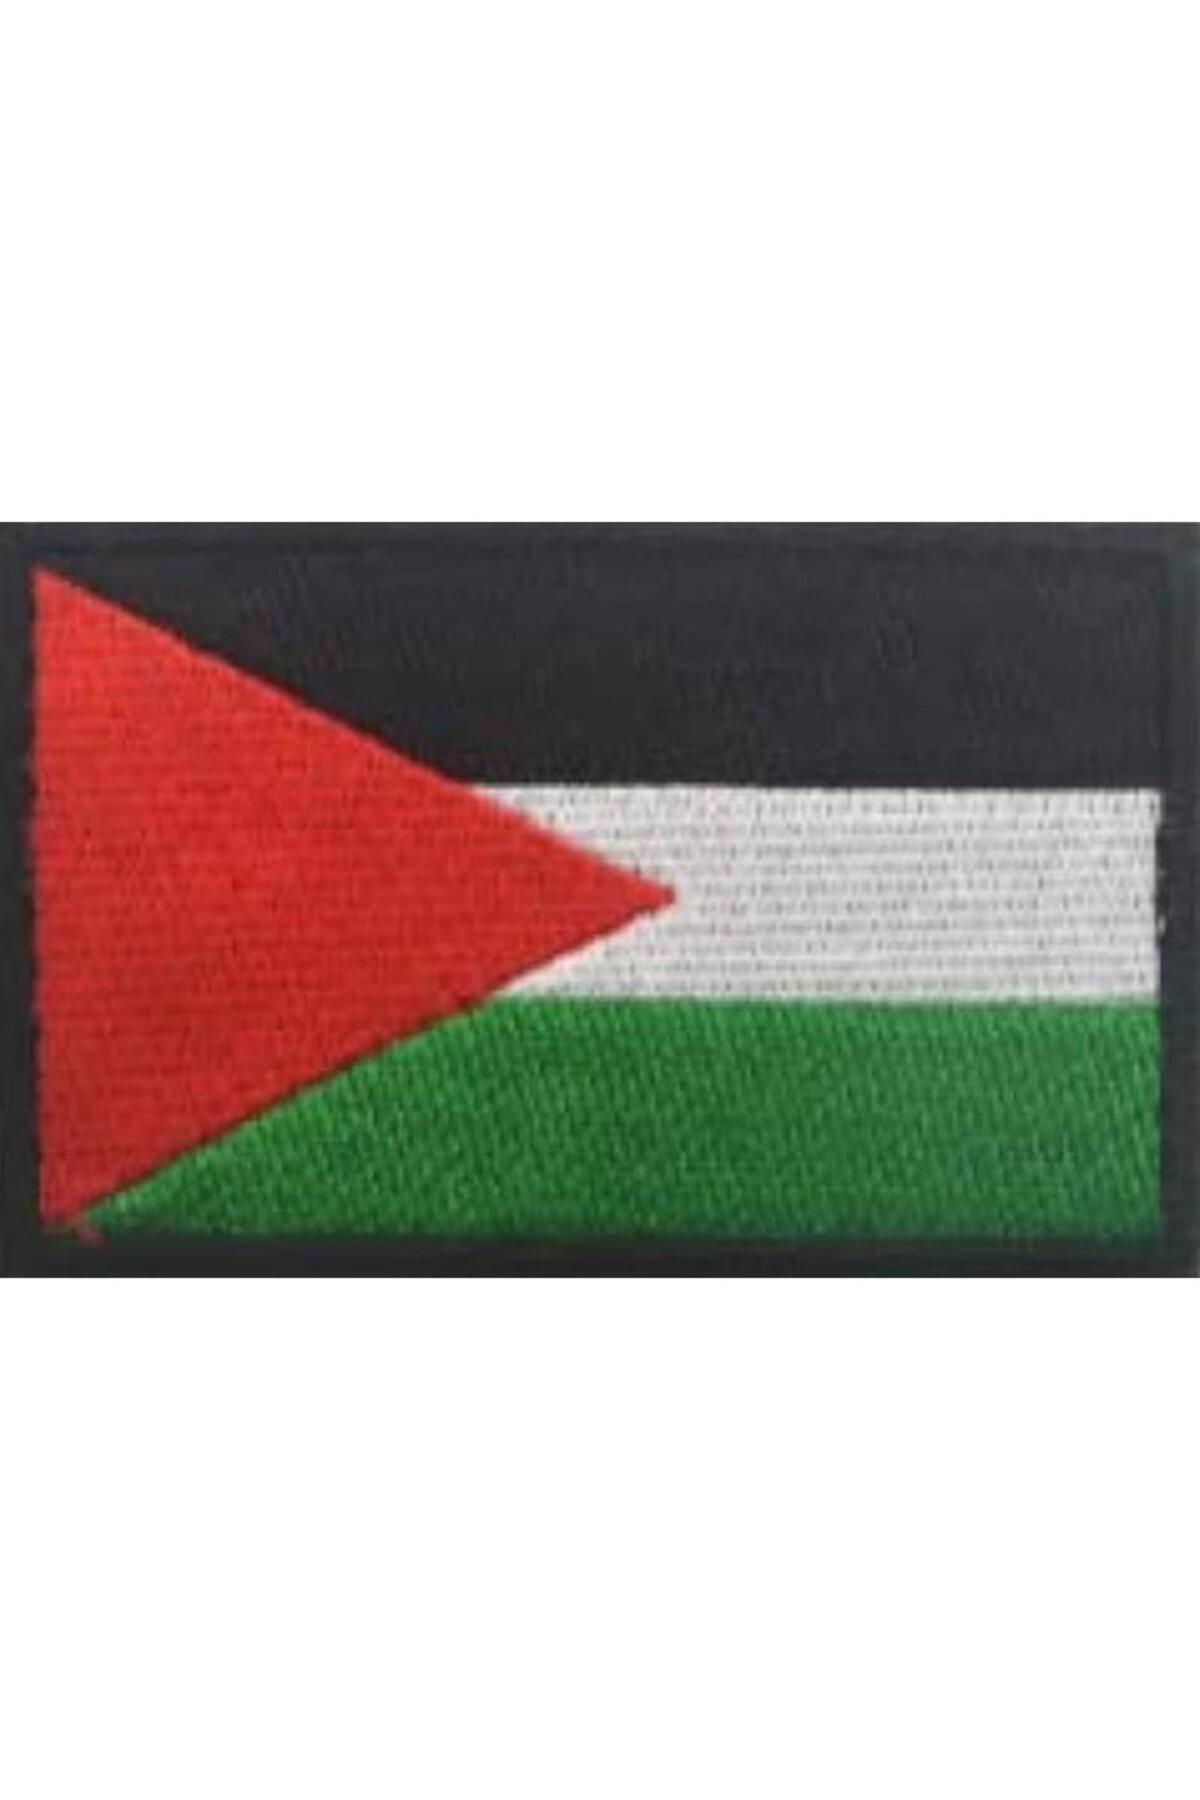 Sim Nakış Cırt Bantlı Filistin Bayrağı nakış işleme arma patch peç 8x5 cm SAVAŞA HAYIR